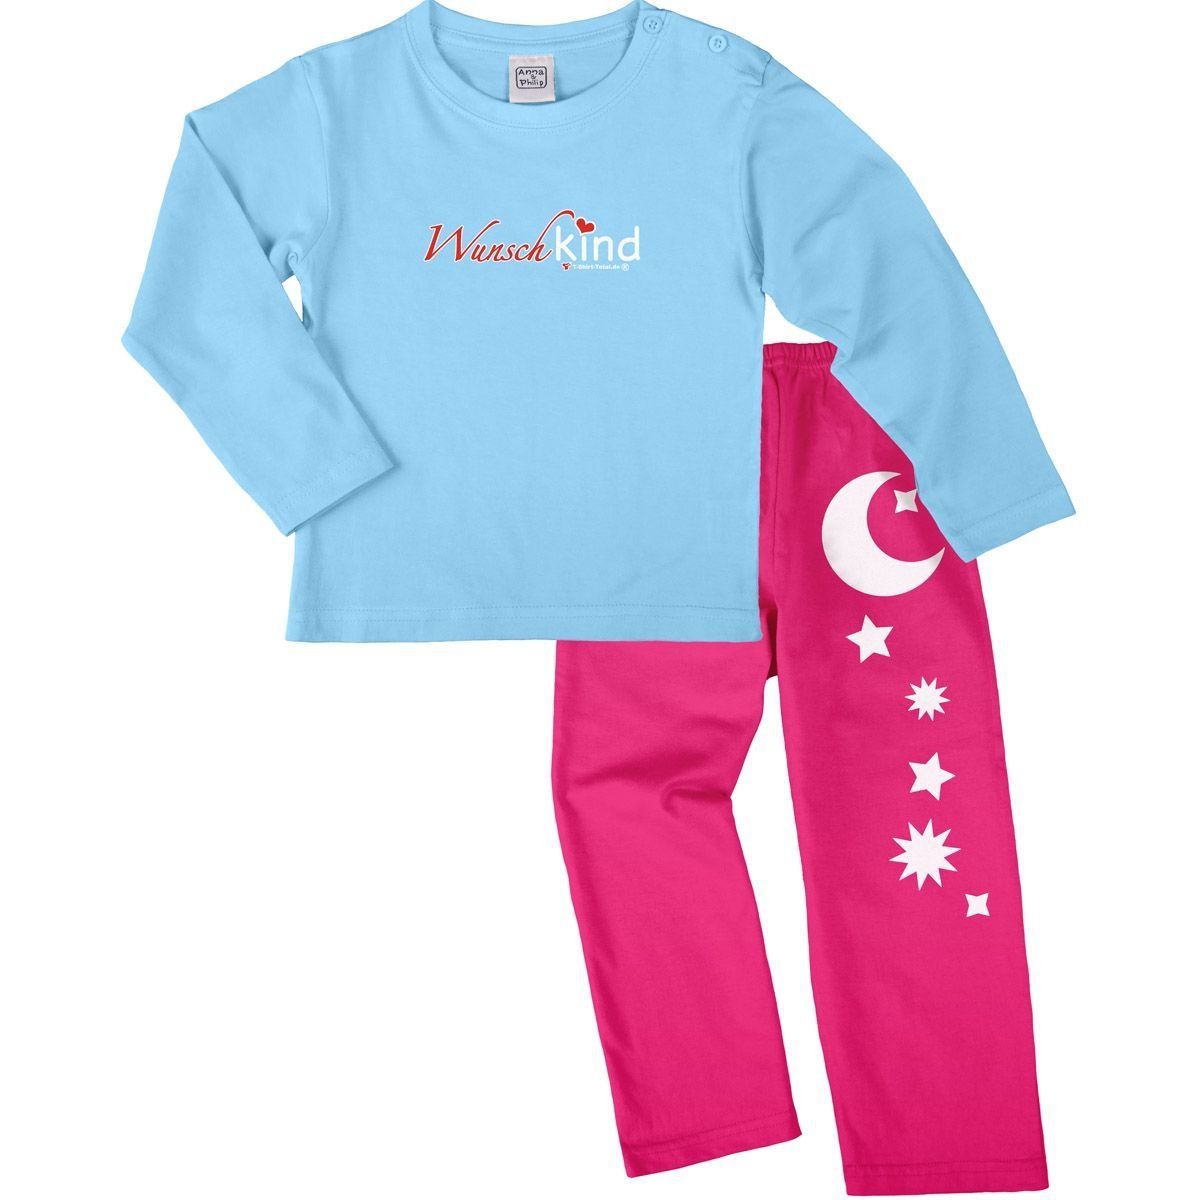 Wunschkind Pyjama Set hellblau / pink 110 / 116